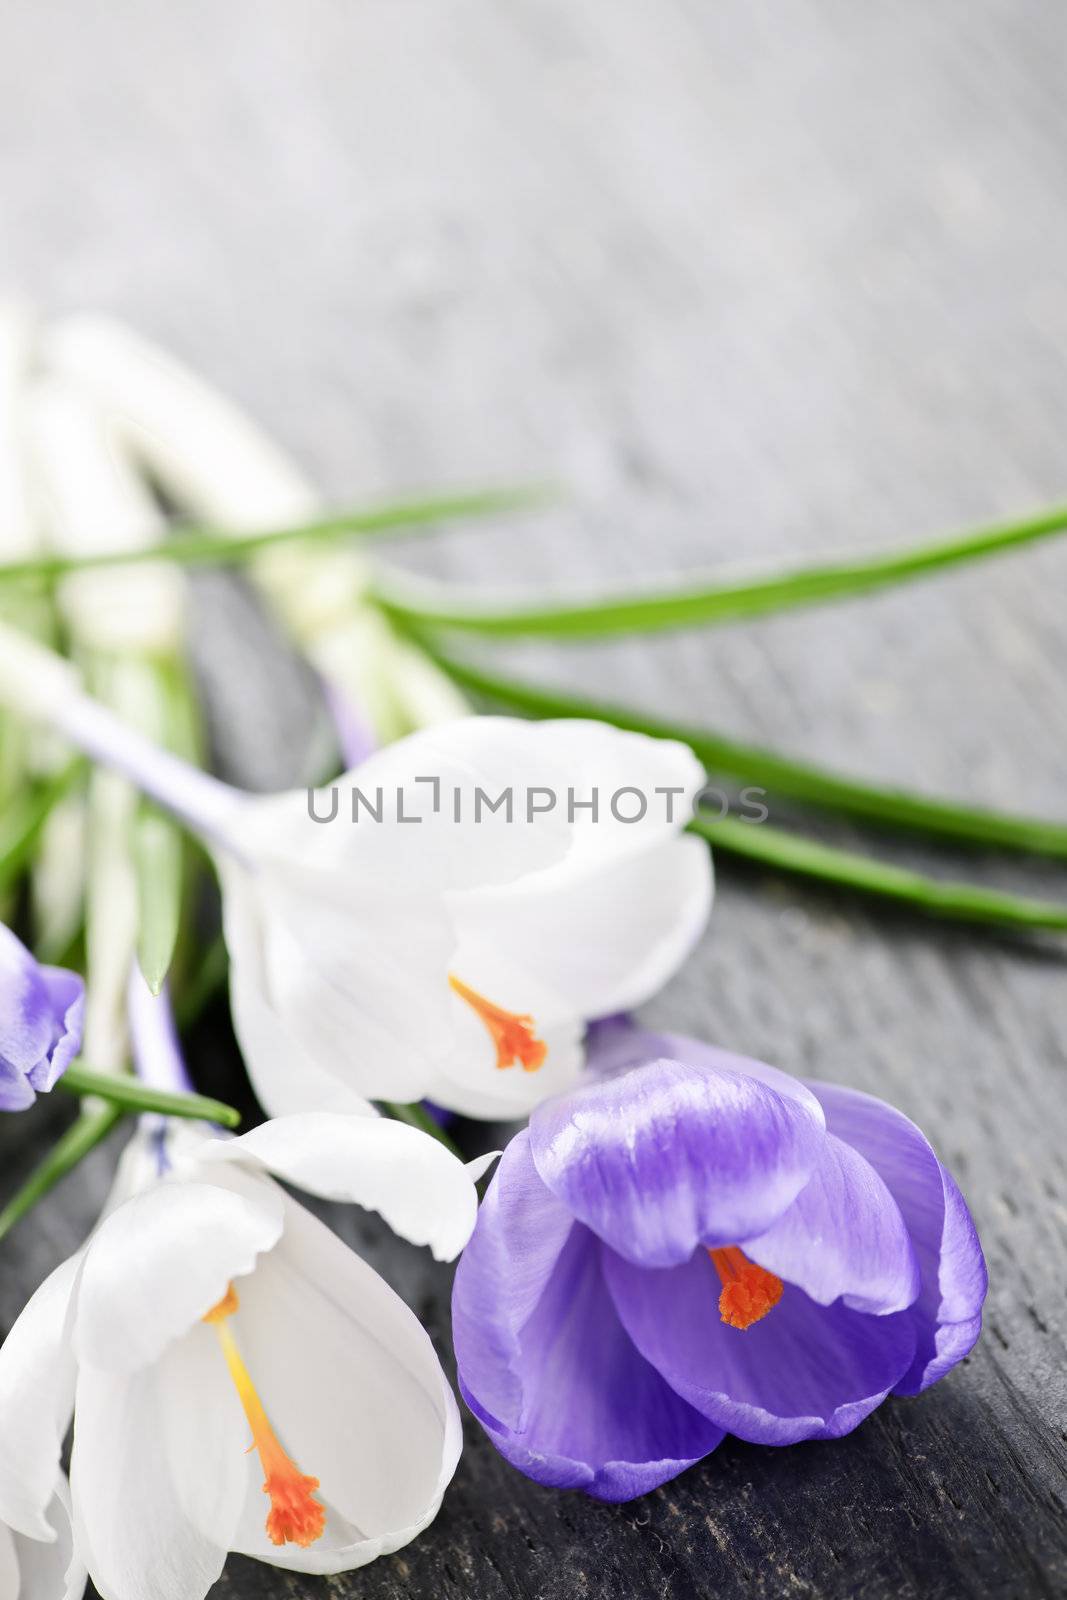 Fresh cut white and purple spring crocus flowers